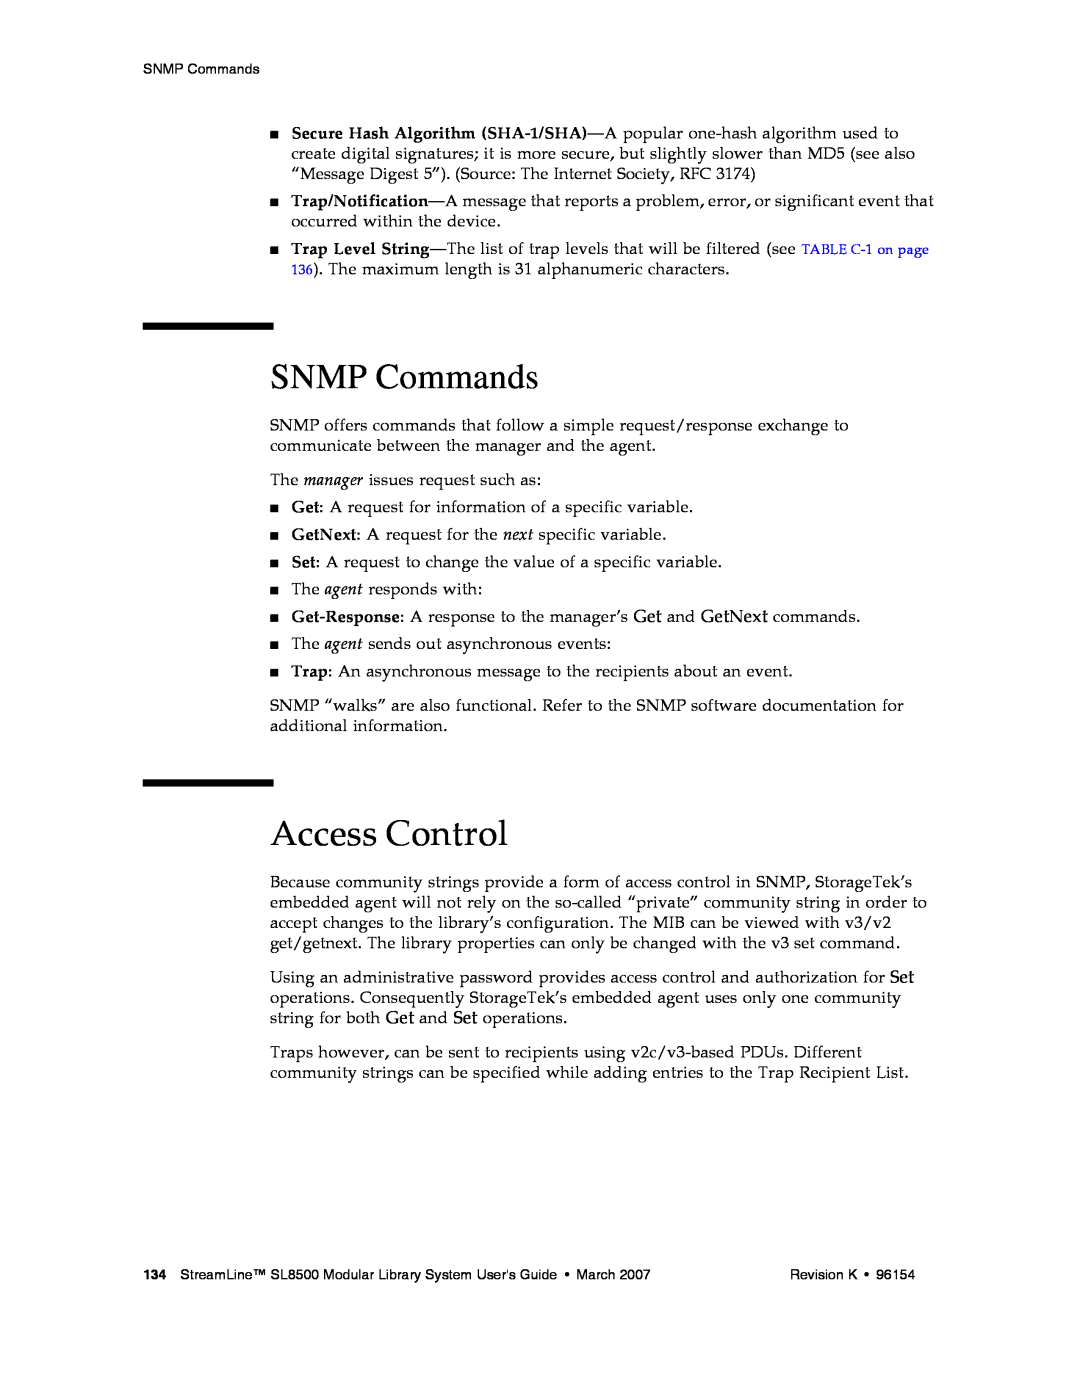 Sun Microsystems SL8500 manual SNMP Commands, Access Control 